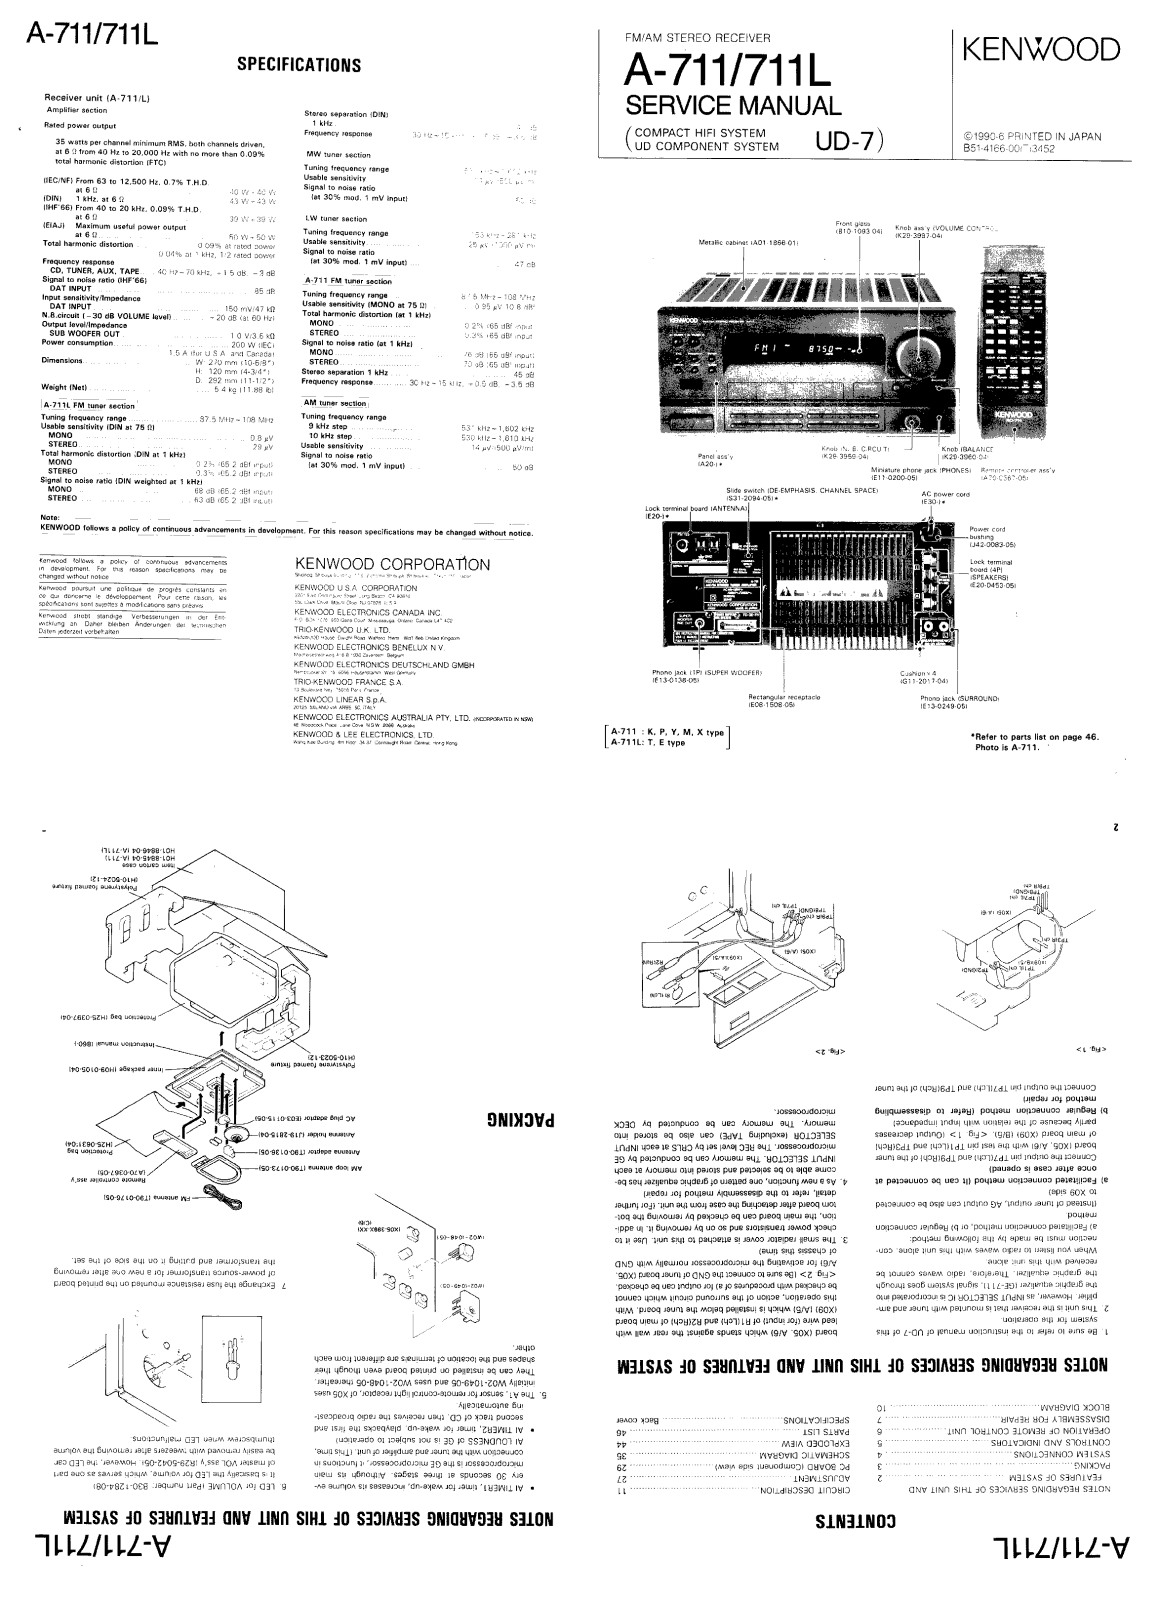 Kenwood A-711 Service manual